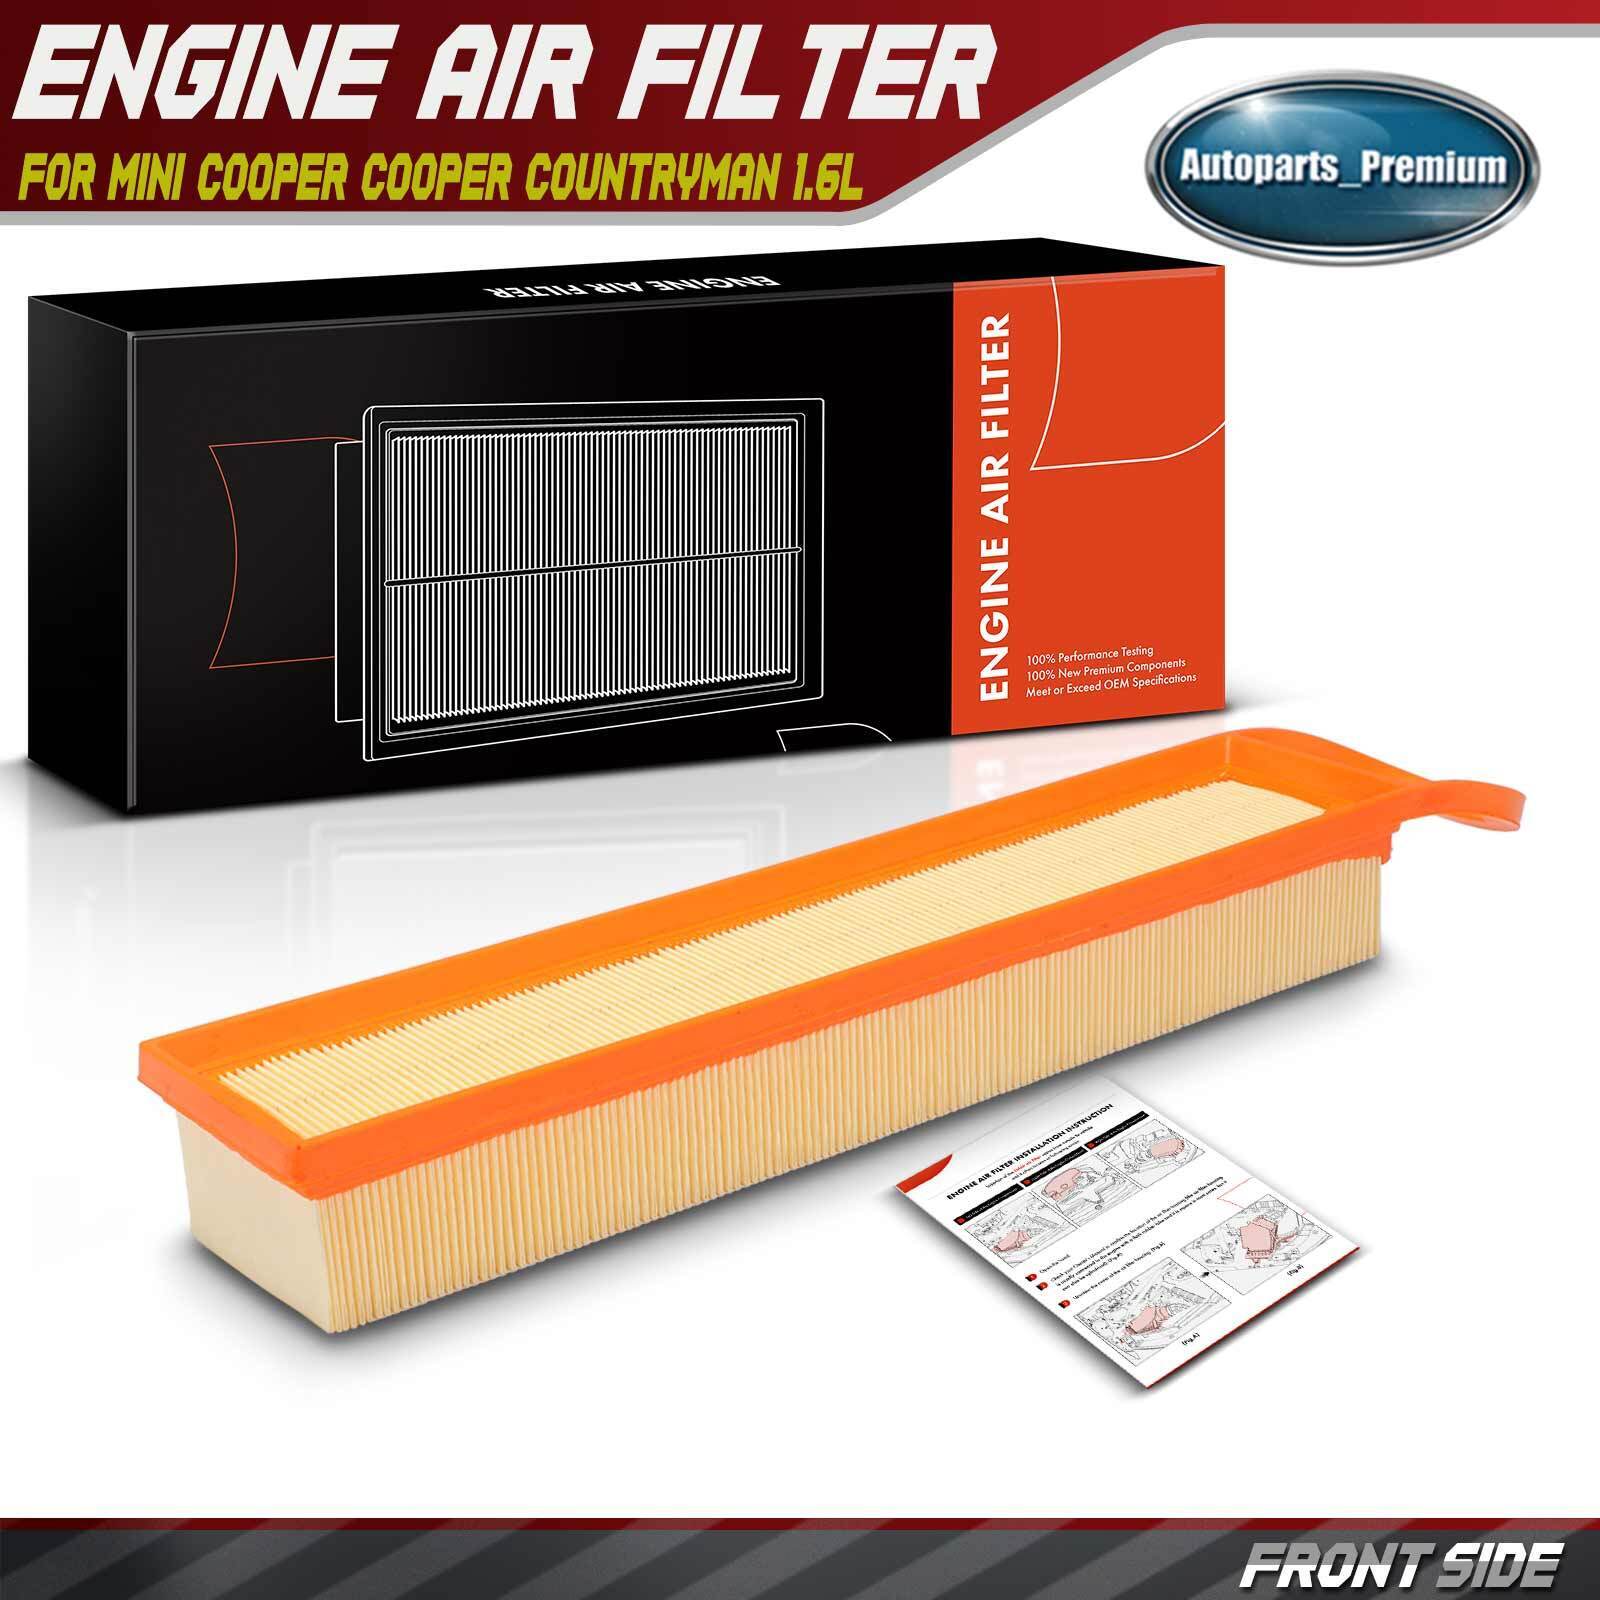  Engine Air Filter for Mini Cooper 07-15 Cooper Countryman 2011-2016 1.6L Manual